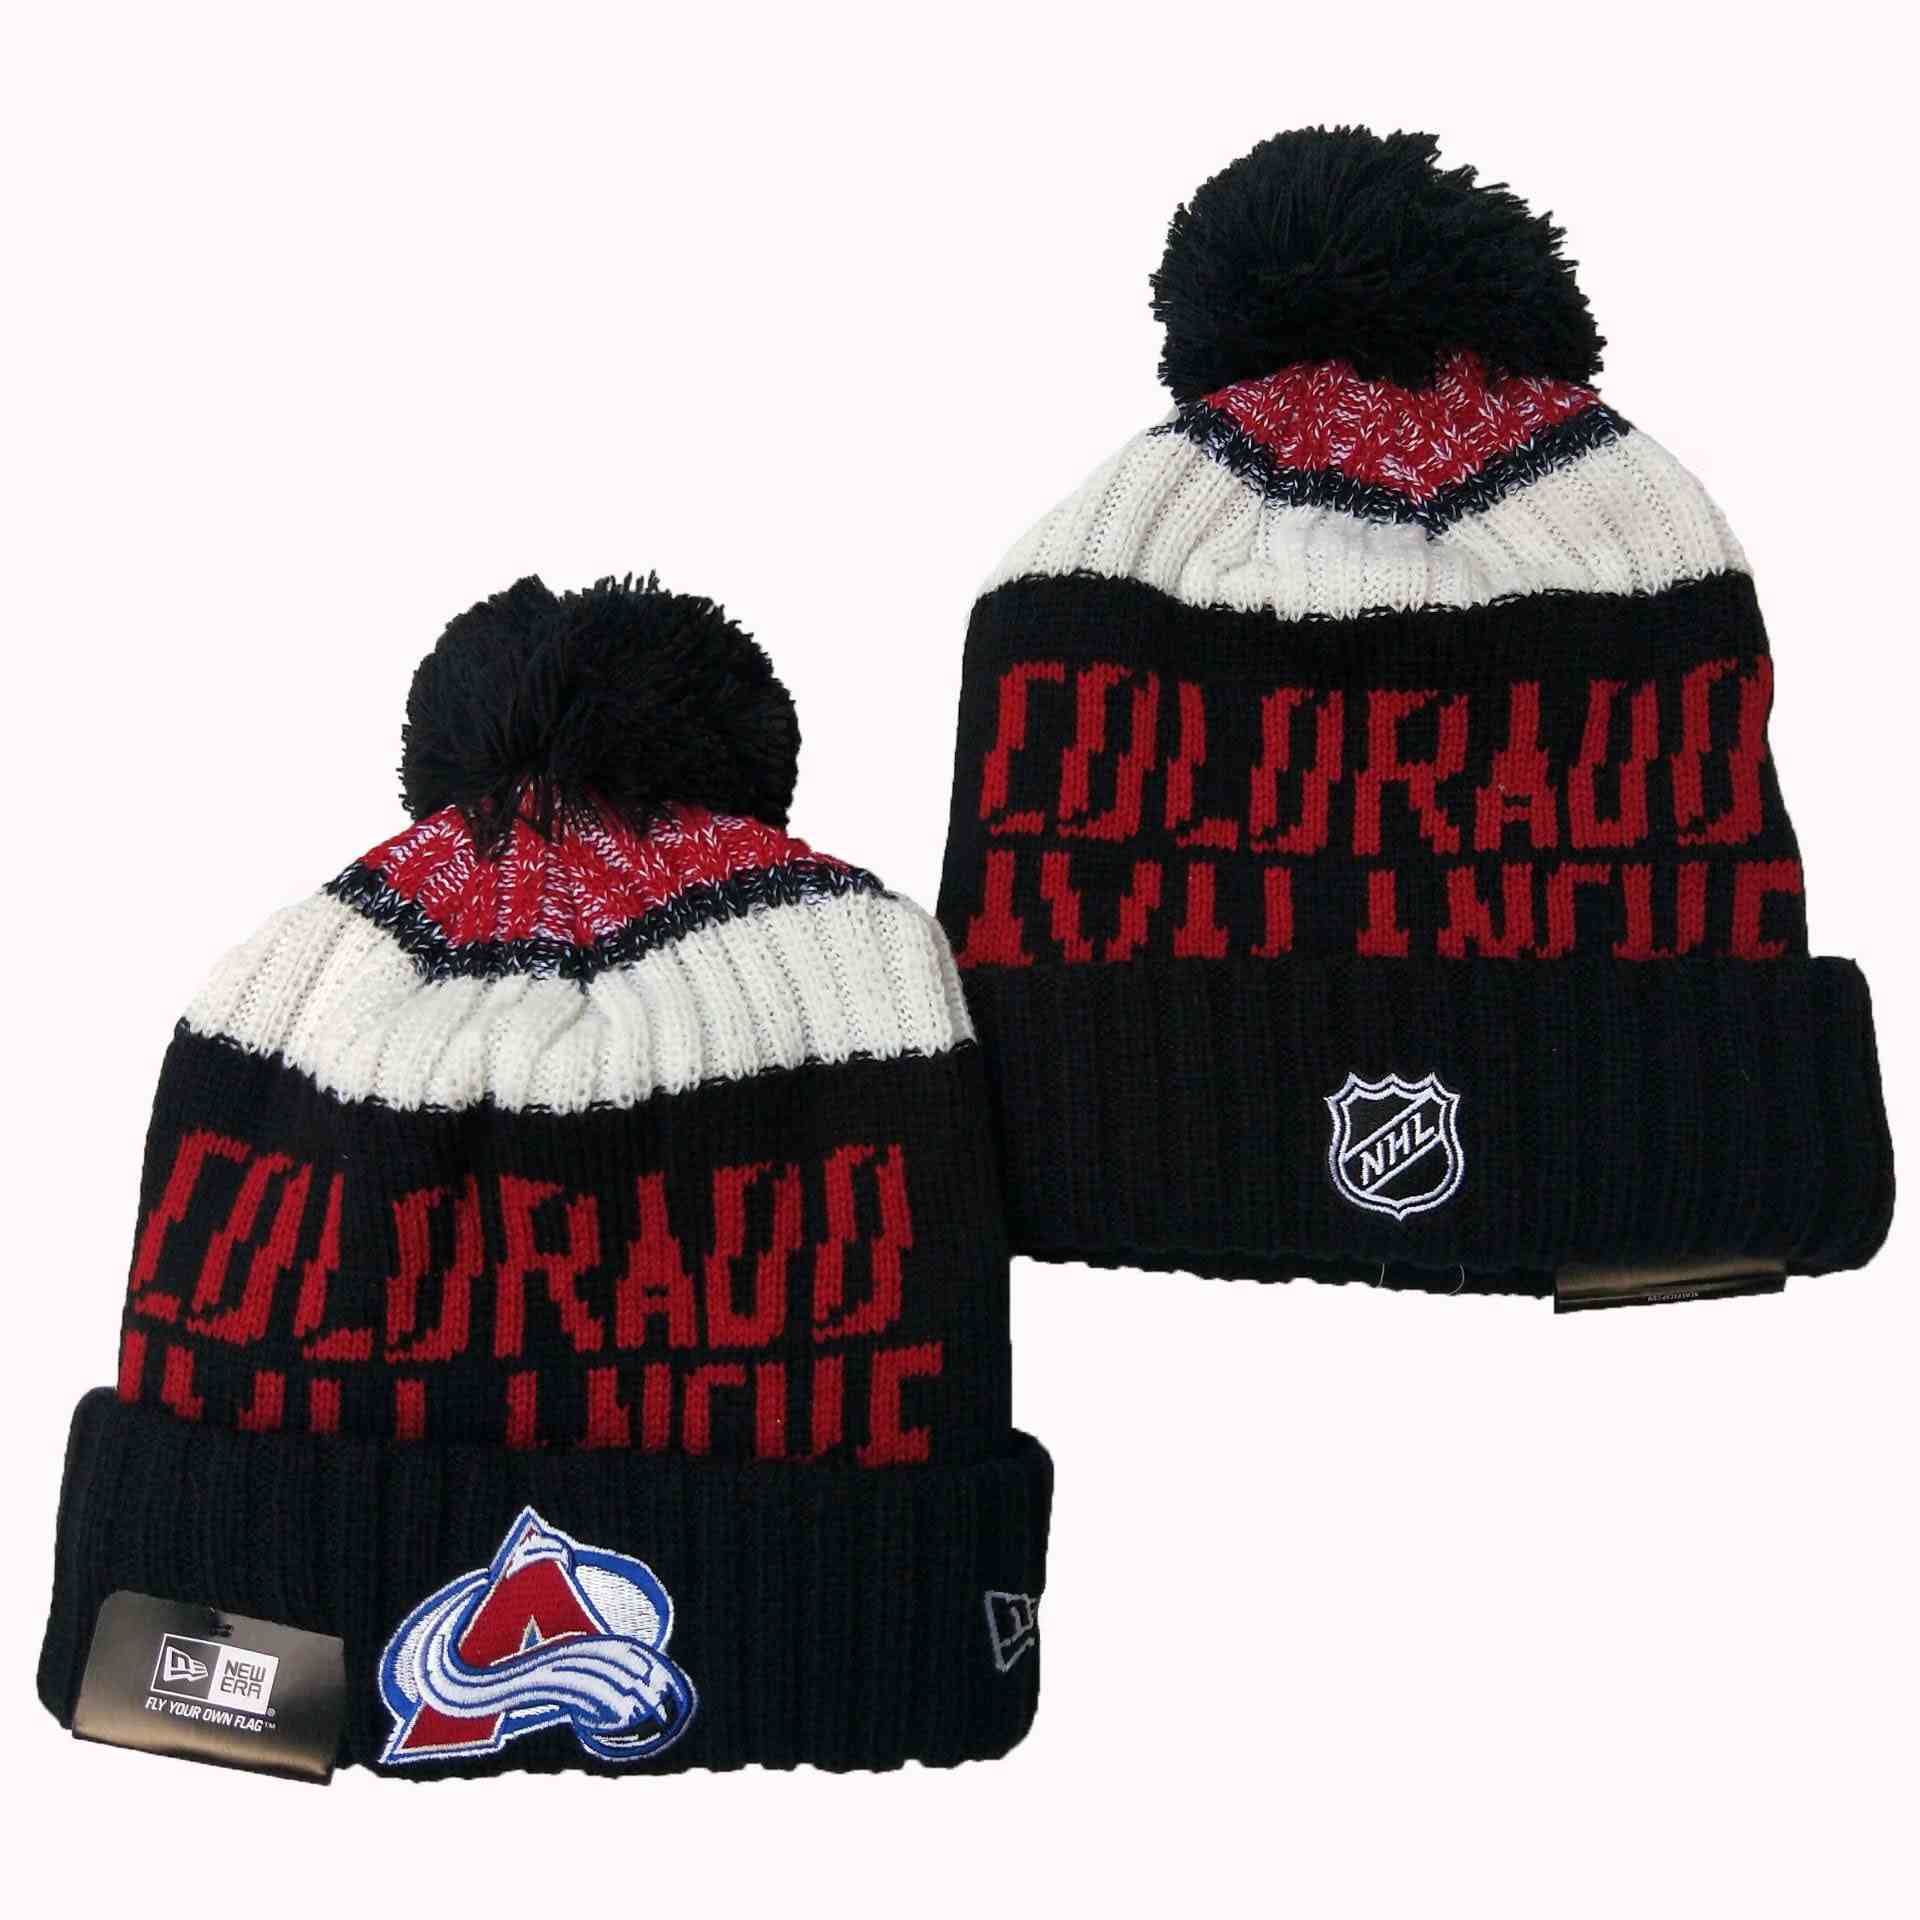 Colorado Avalanche knit hat YD1